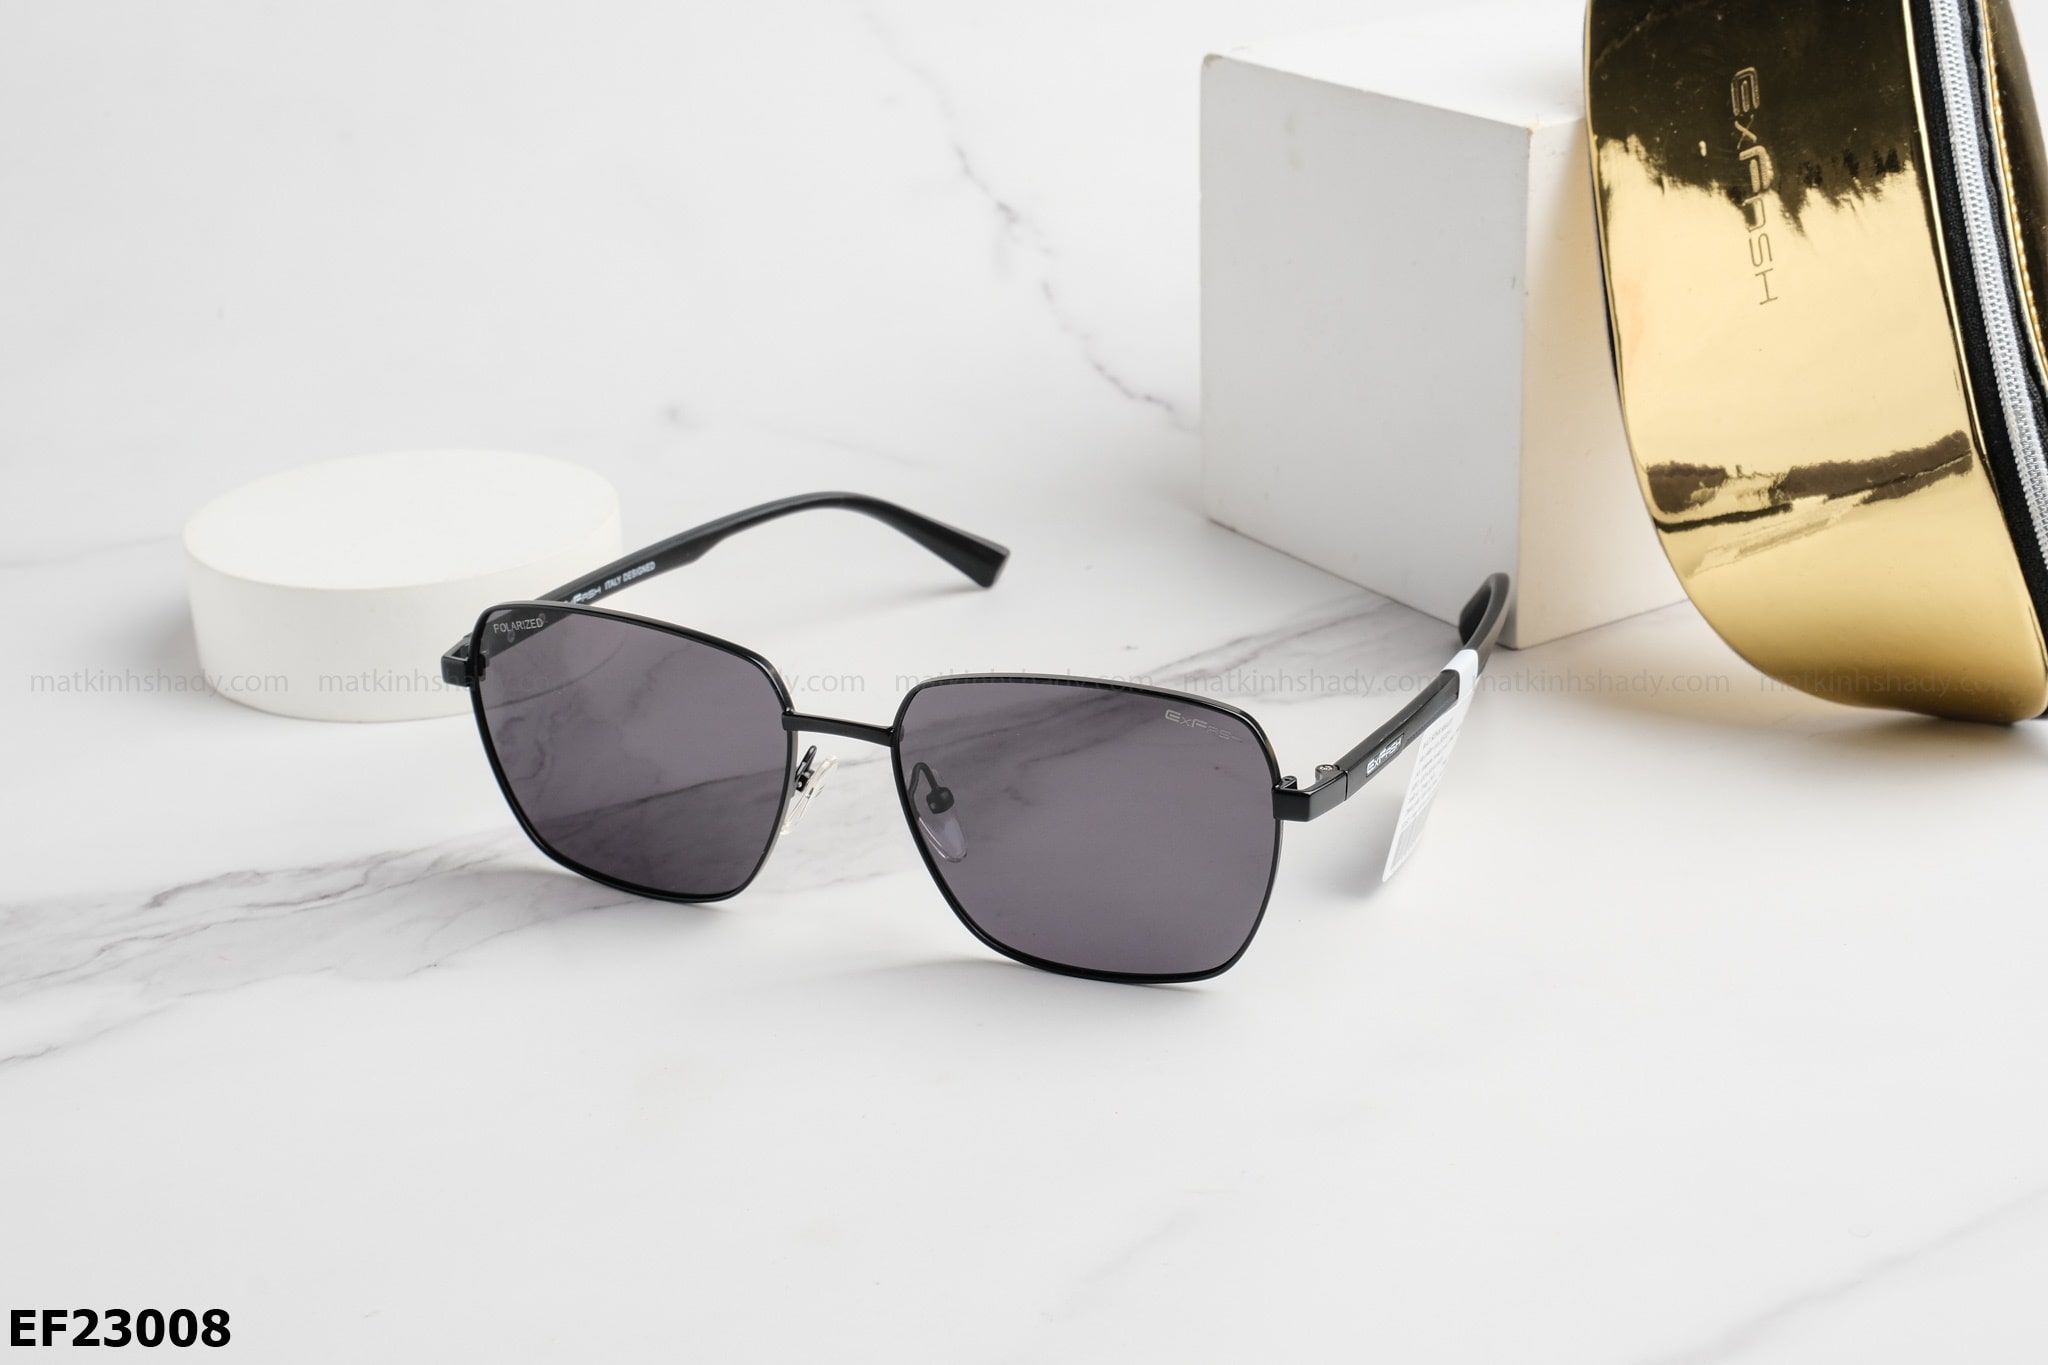  Exfash Eyewear - Sunglasses - EF23008 